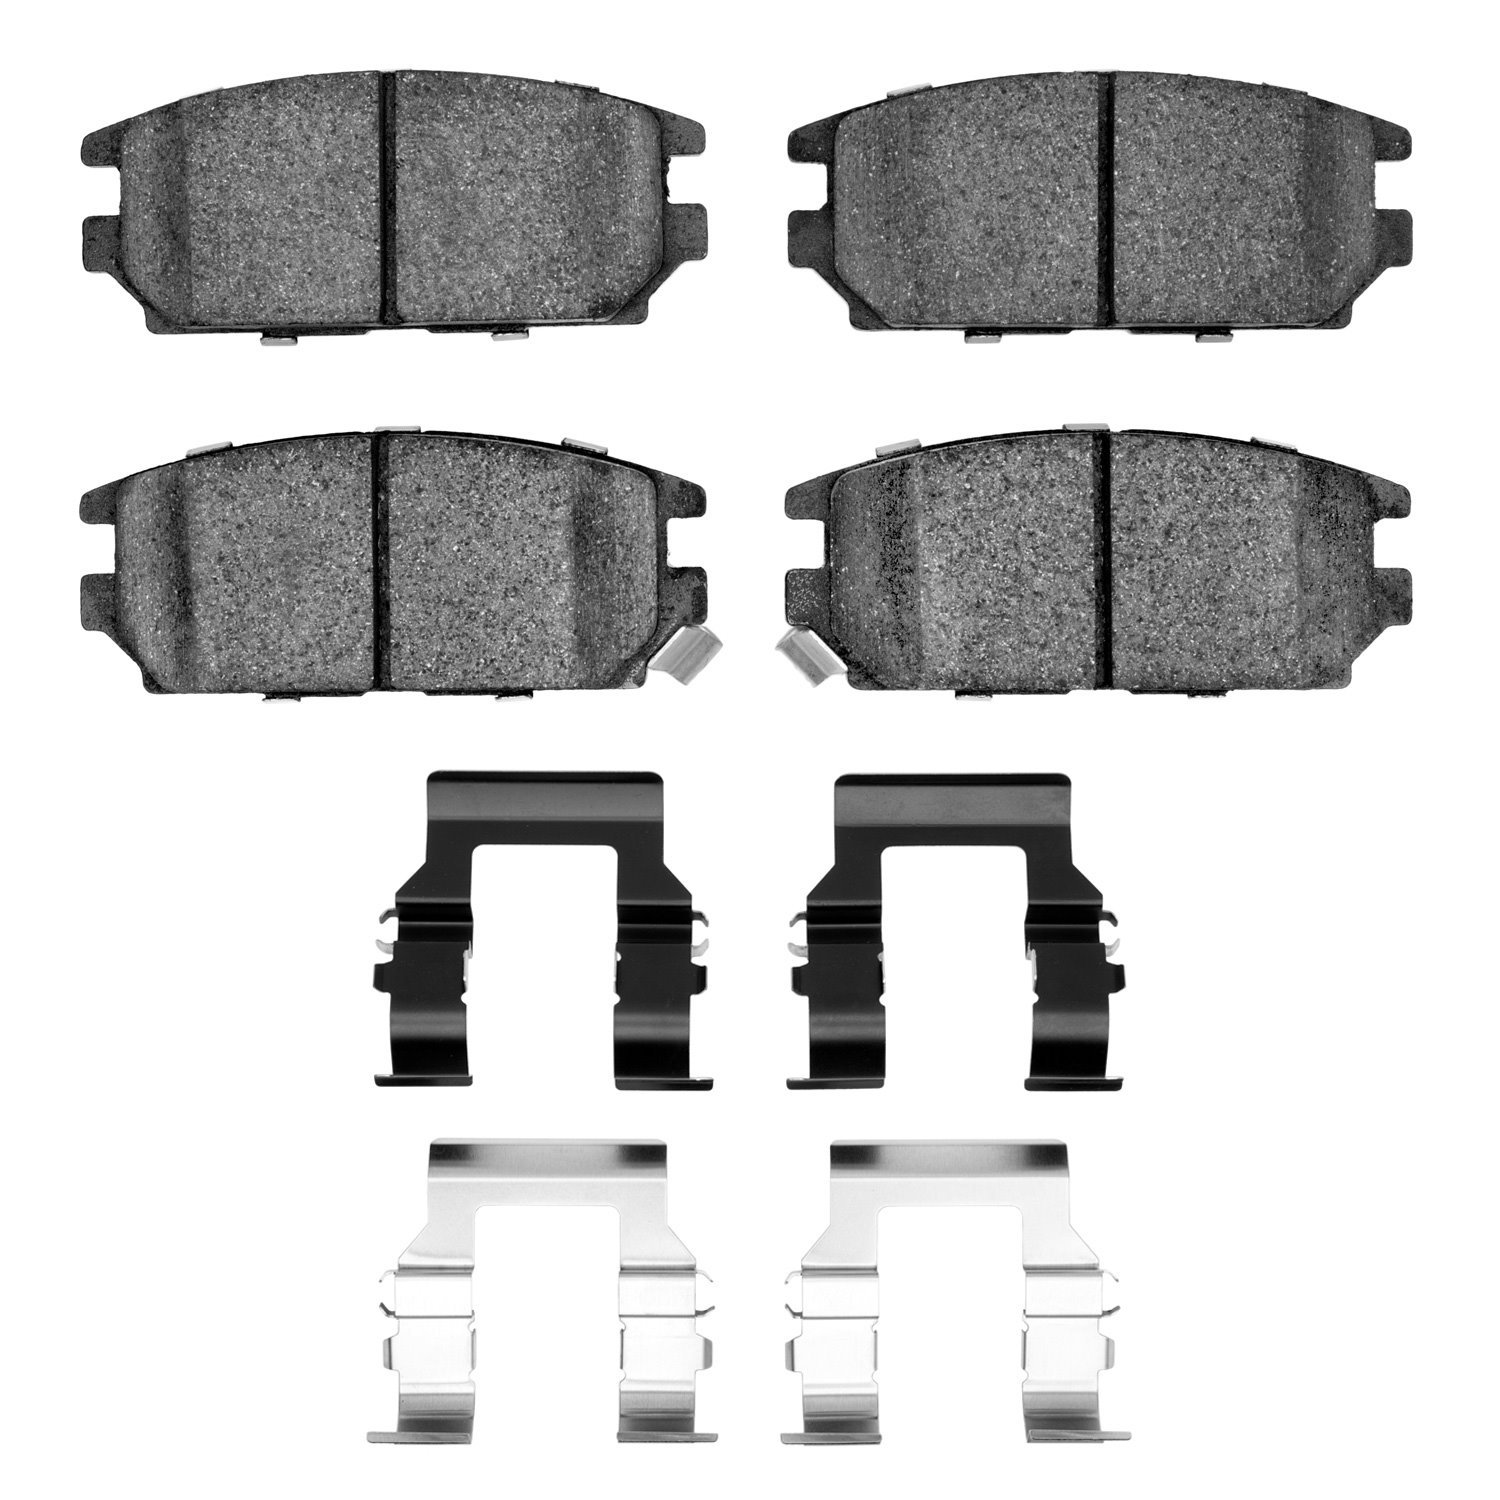 1310-0532-02 3000-Series Ceramic Brake Pads & Hardware Kit, 1991-2012 Multiple Makes/Models, Position: Rear